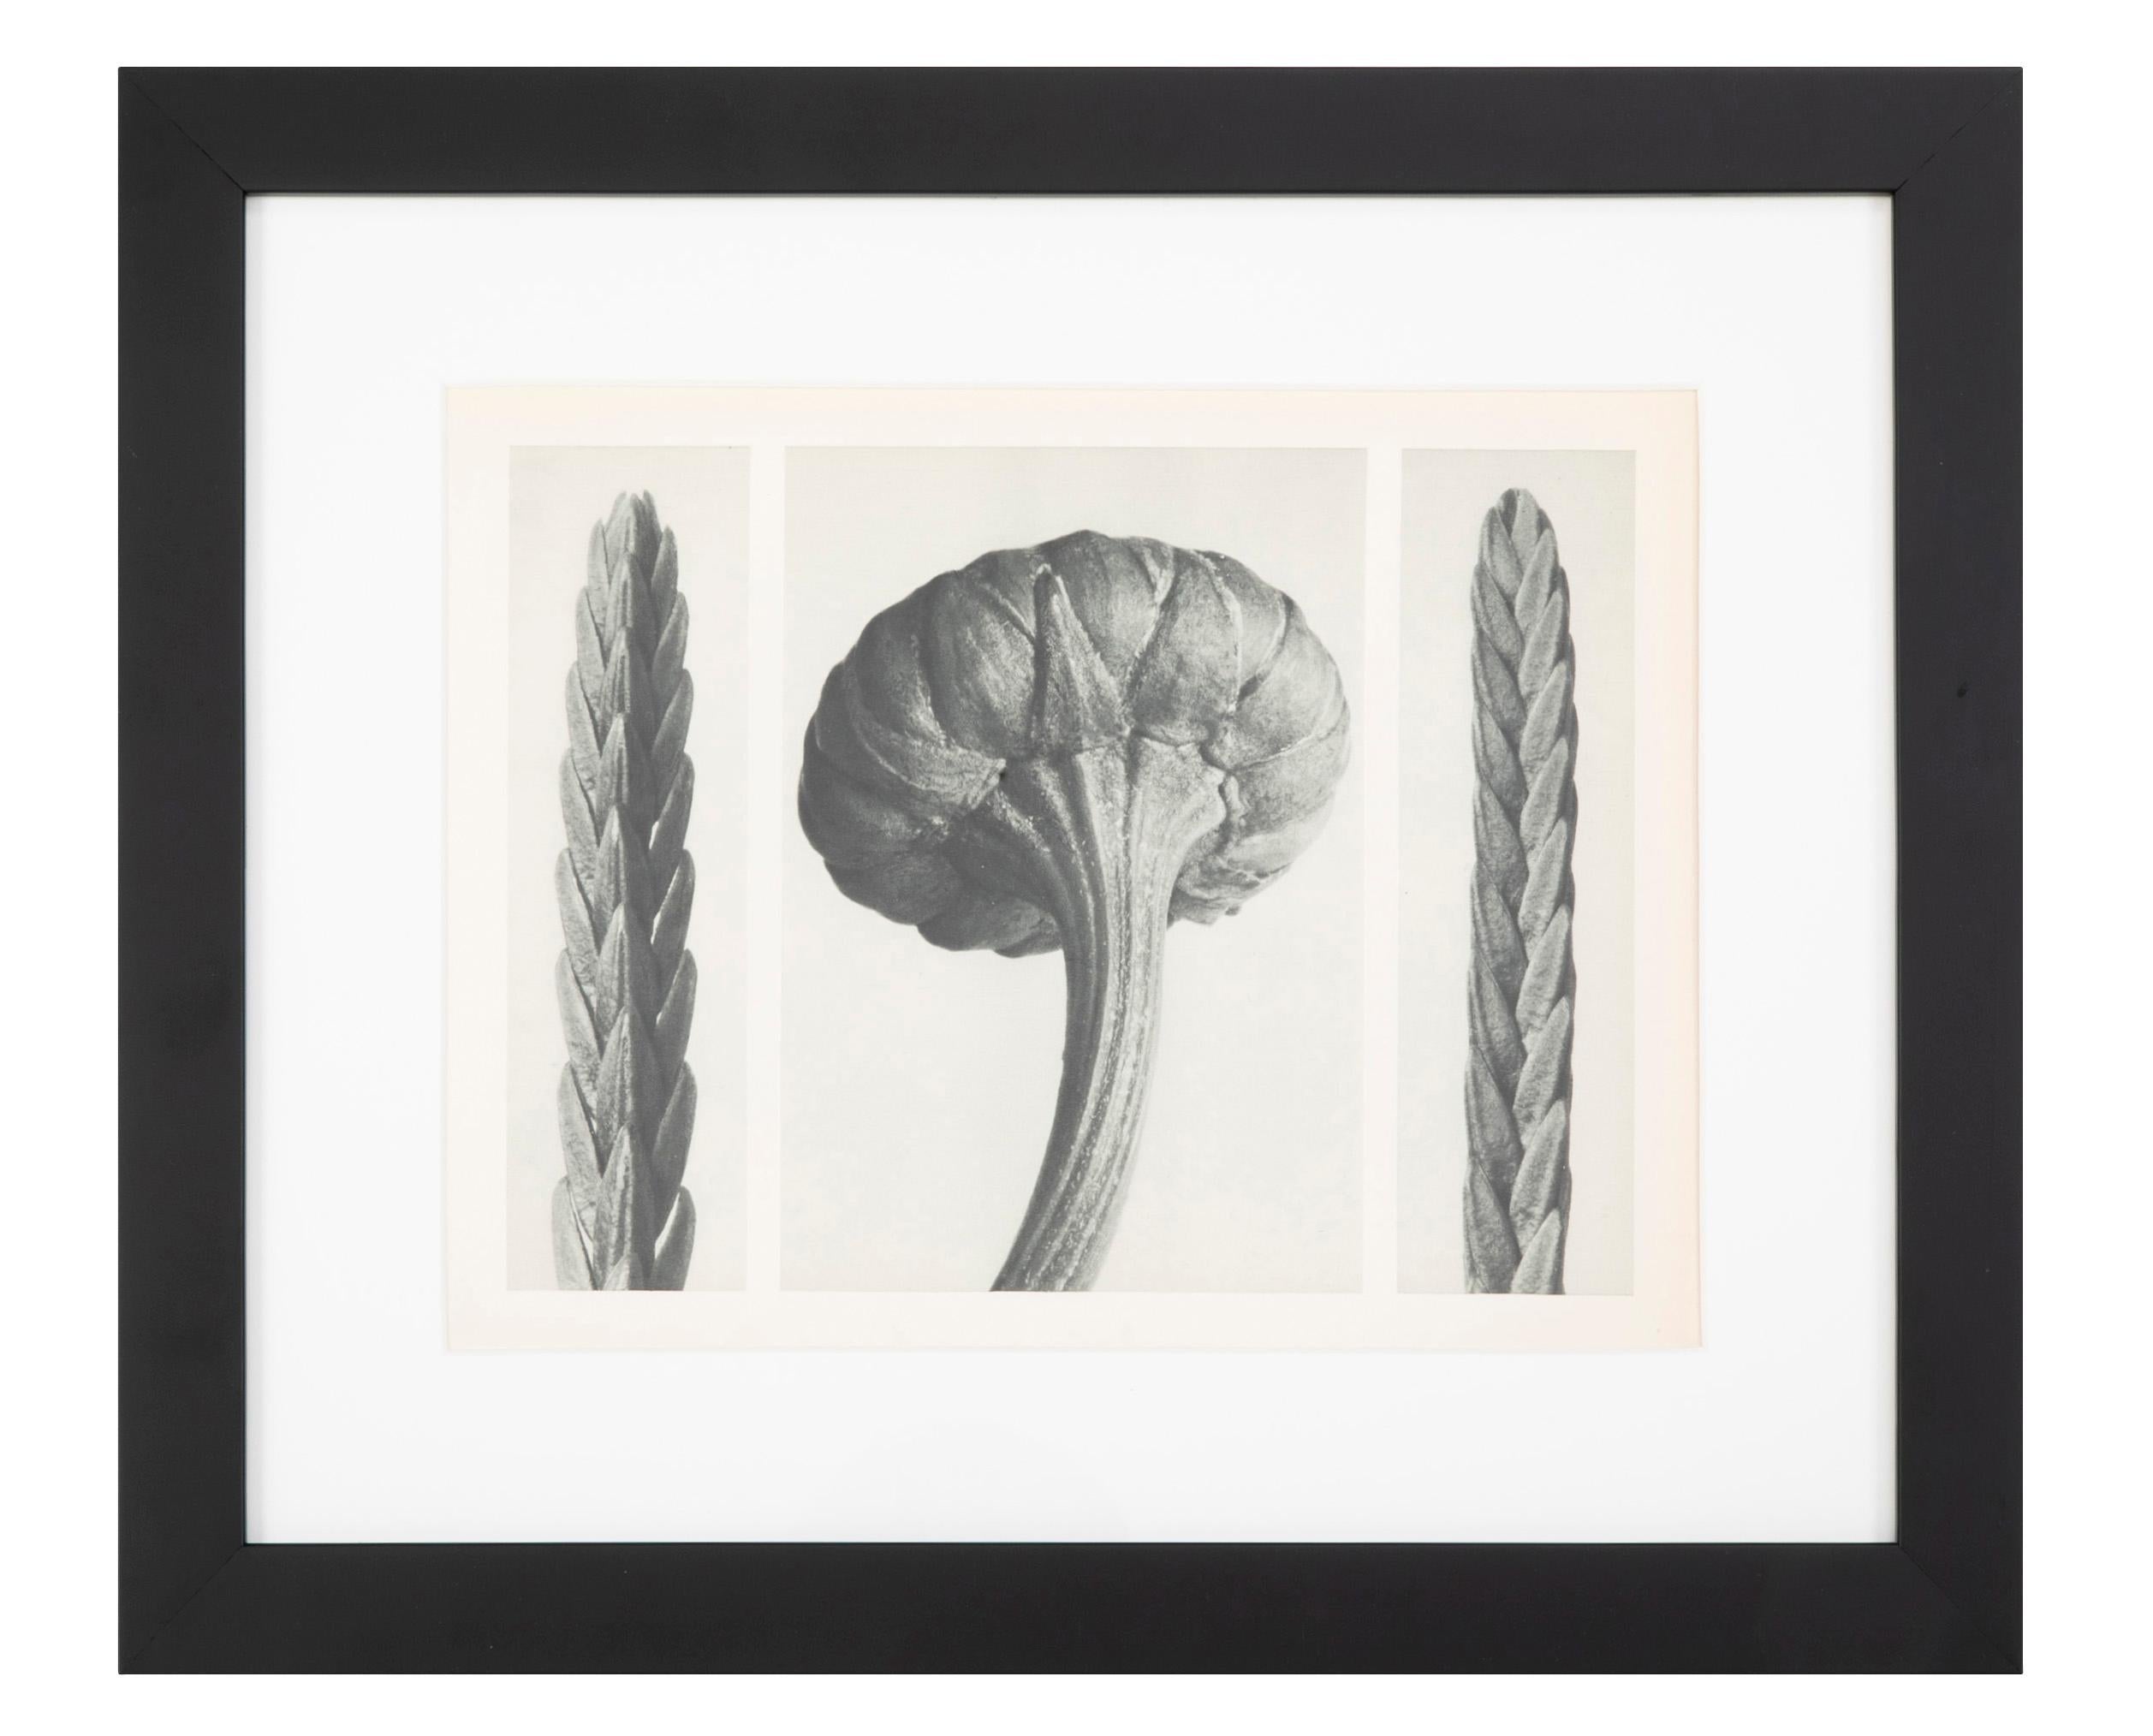 A set of botanical photogravures by Karl Blossfeldt (German, b. 1914 - d. 1932), 